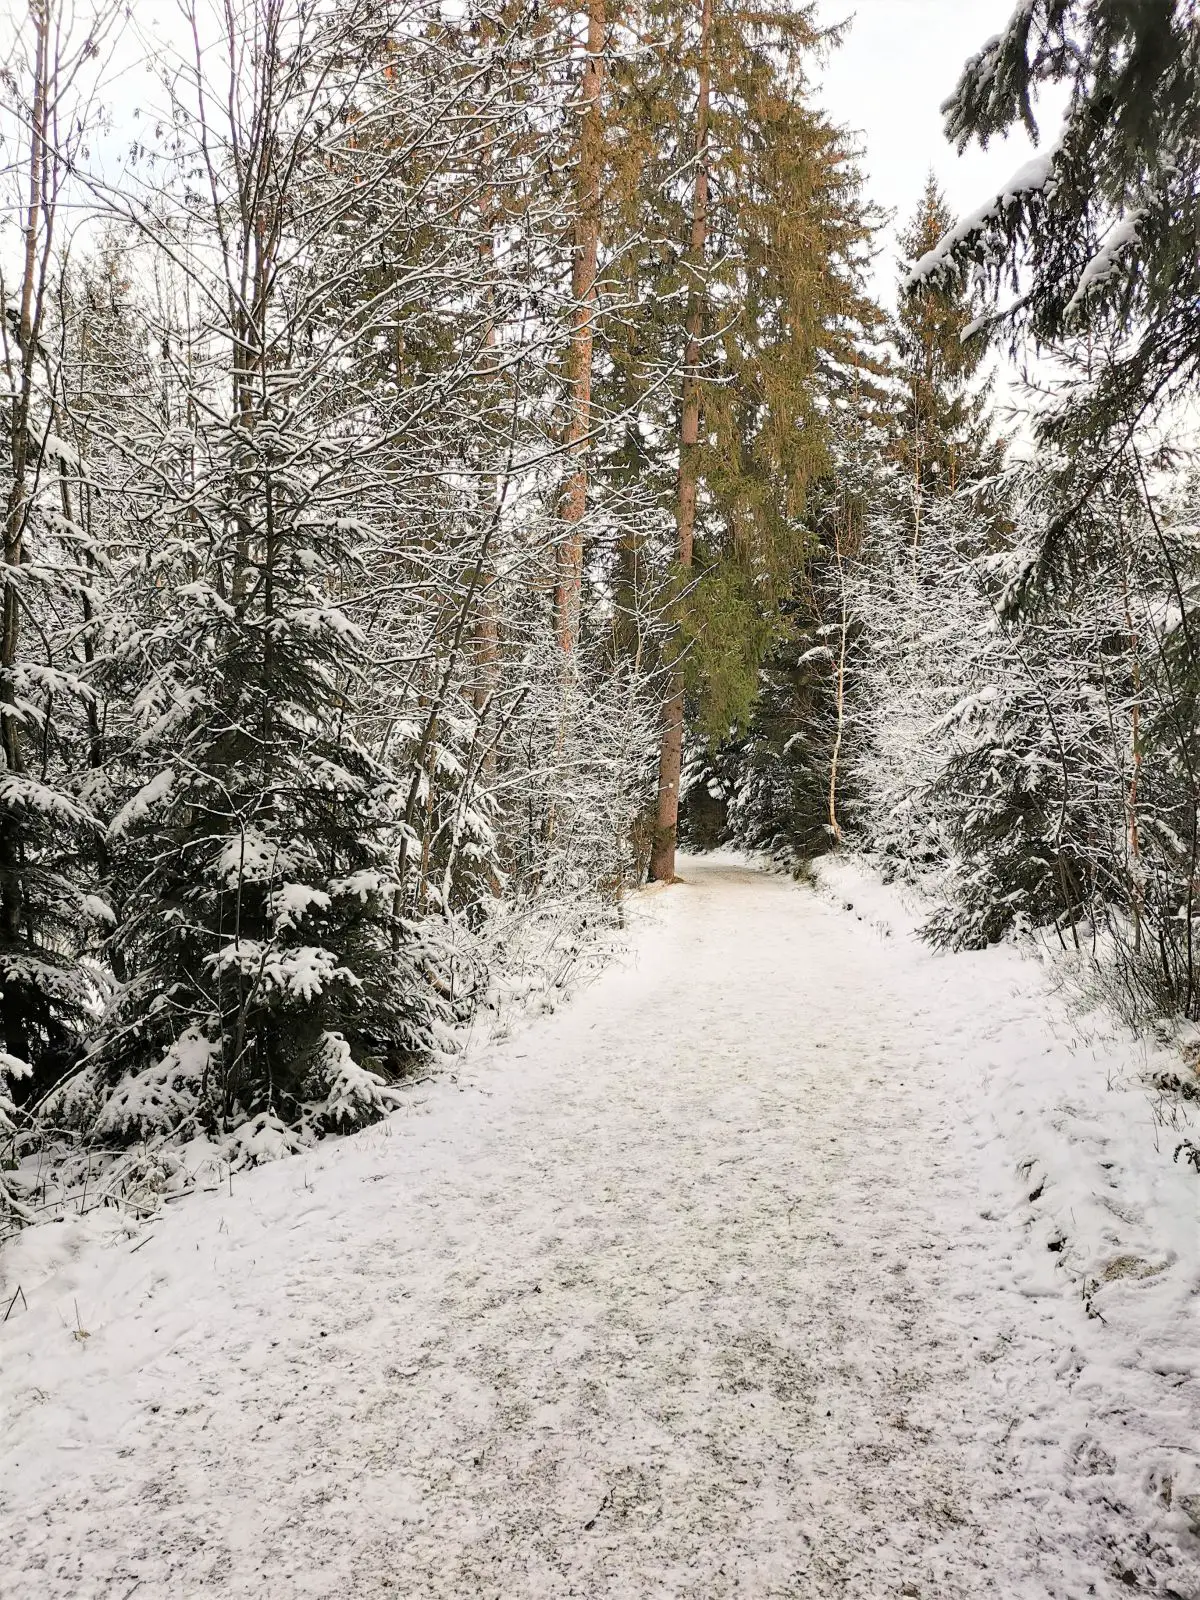 Winterspaziergang am Hopfensee in Bayern, Weg durch den Wald